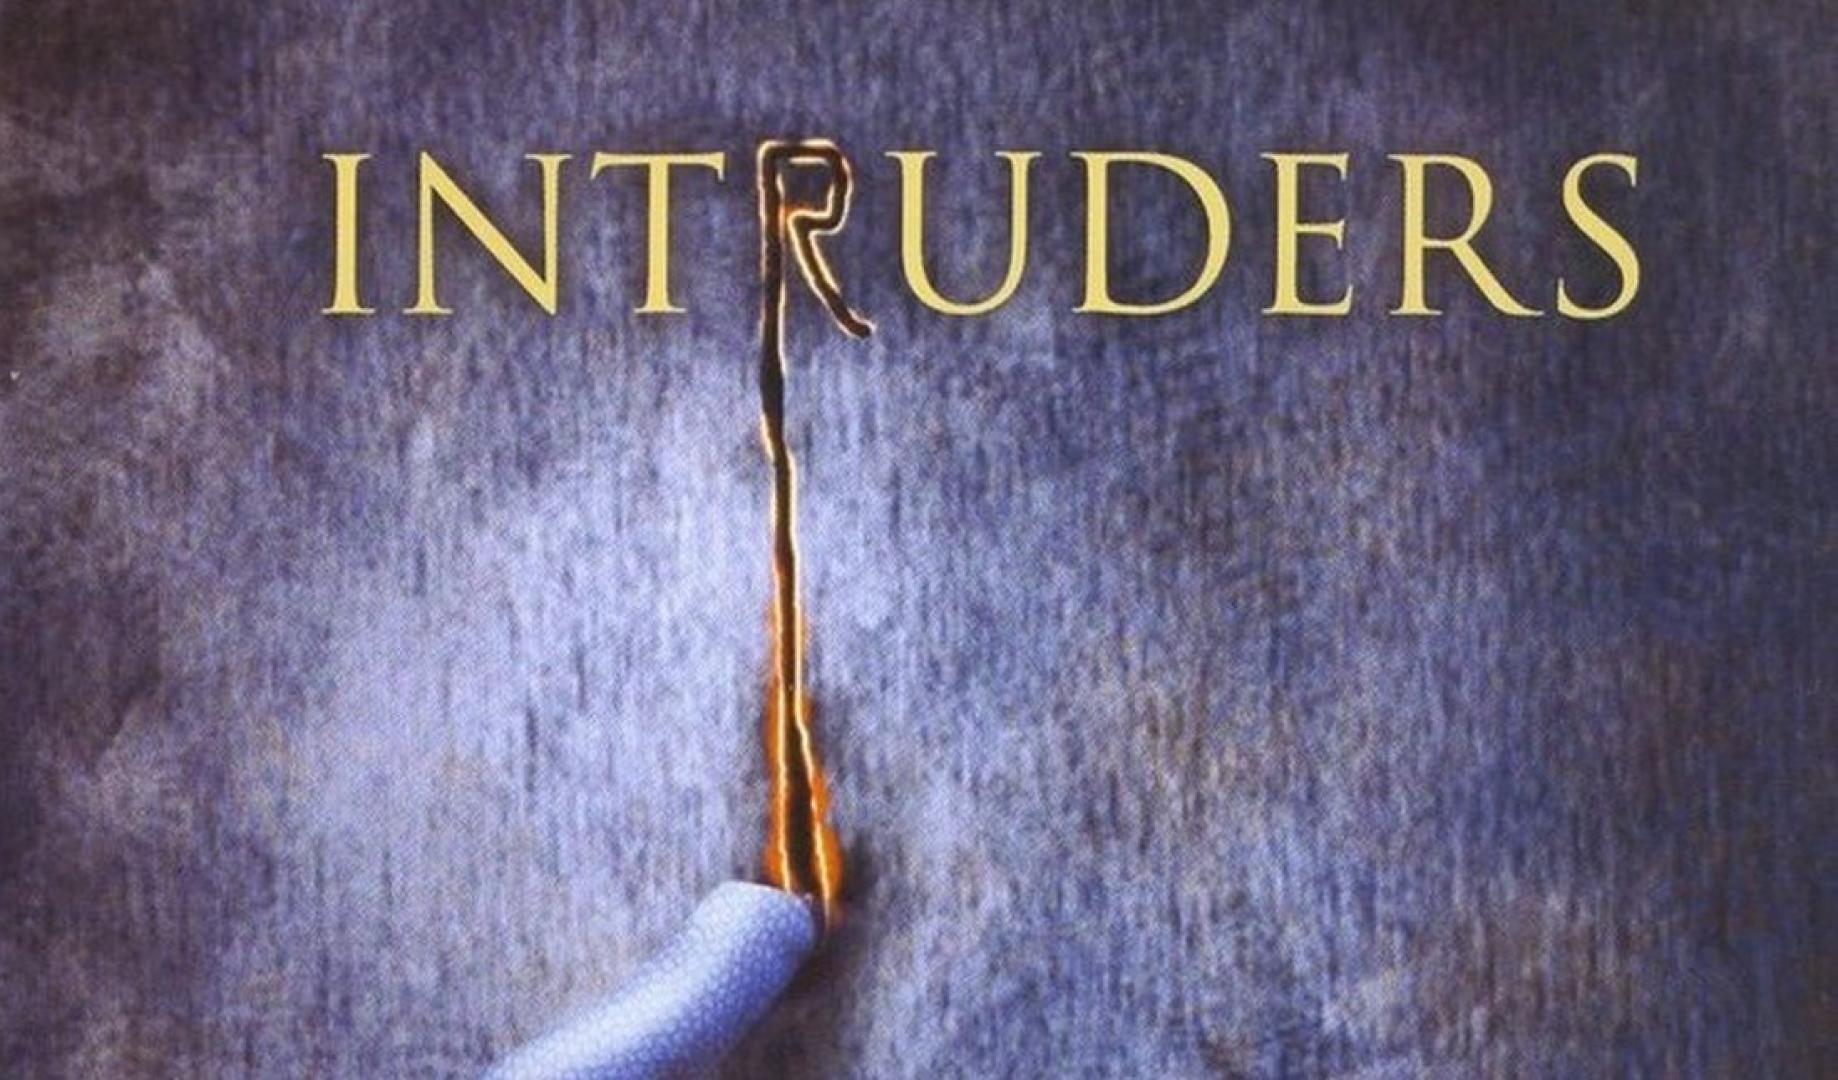 Intruders - Intruderek: Egy új faj születik (1992)